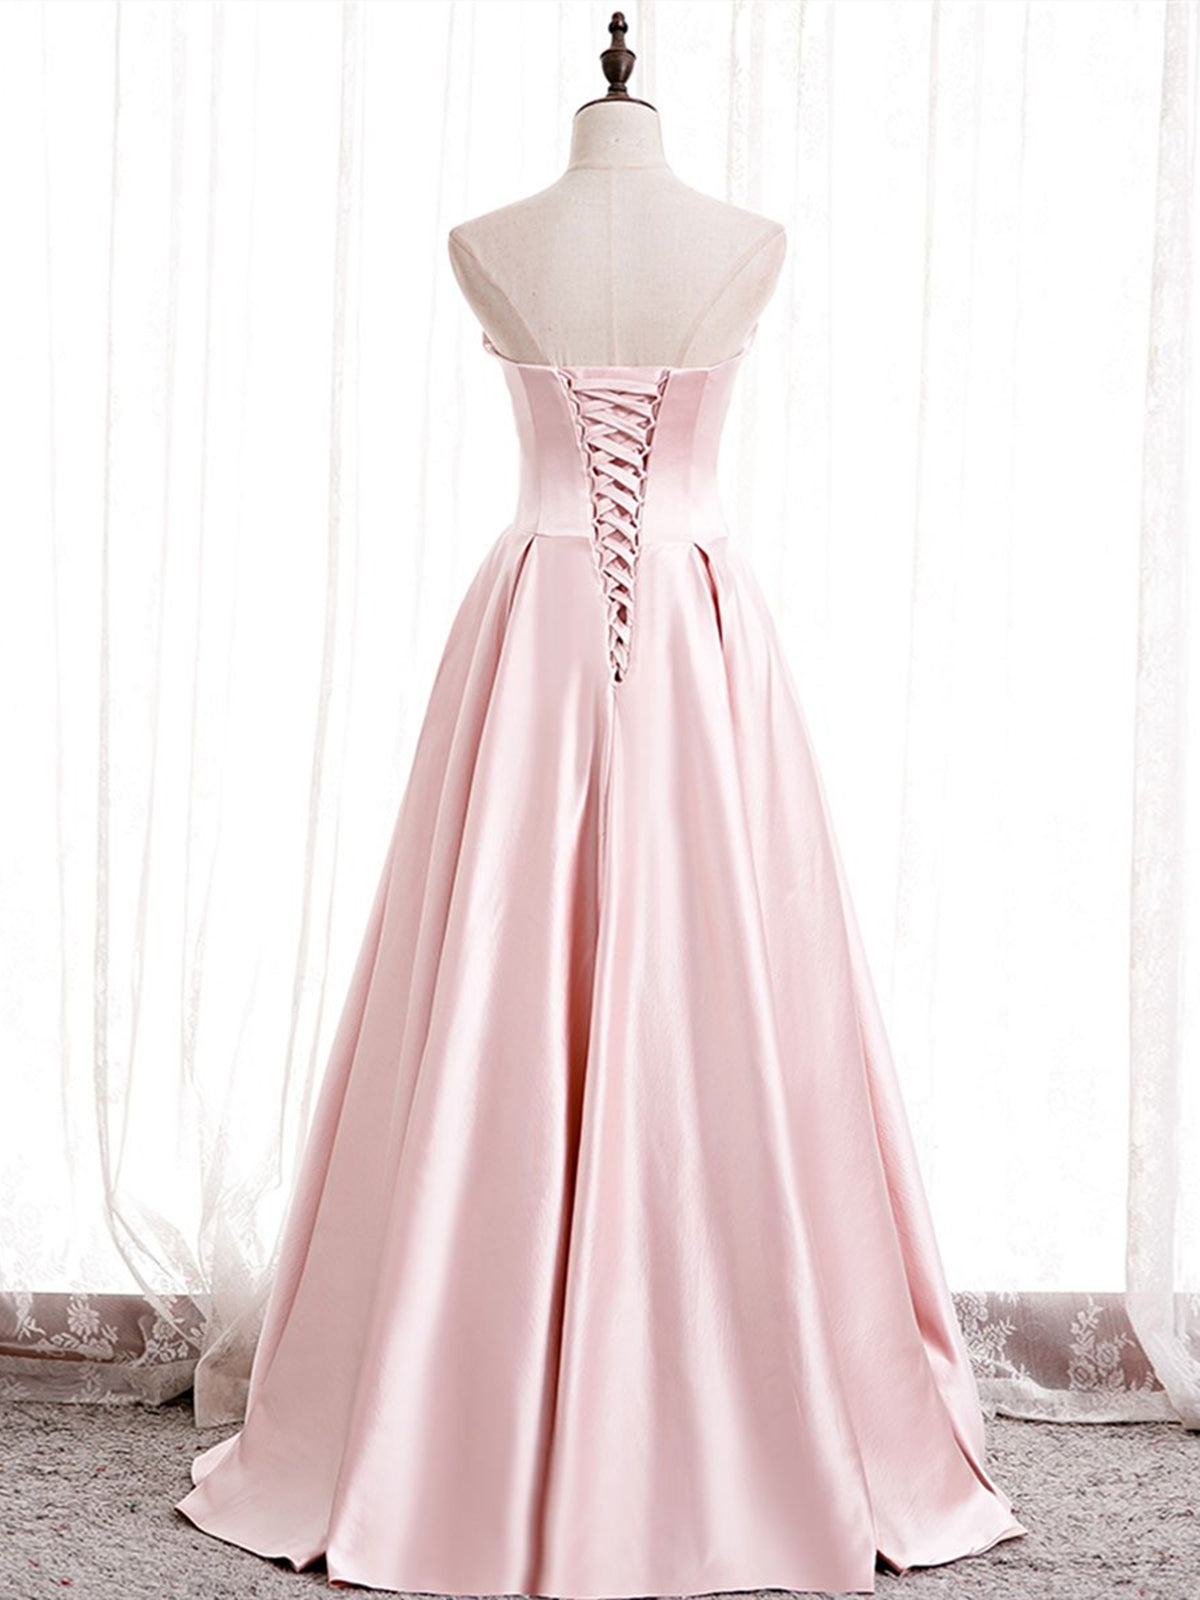 Party Dress Name, Strapless Pink Satin Prom Dresses, Pink Satin Long Formal Evening Dresses